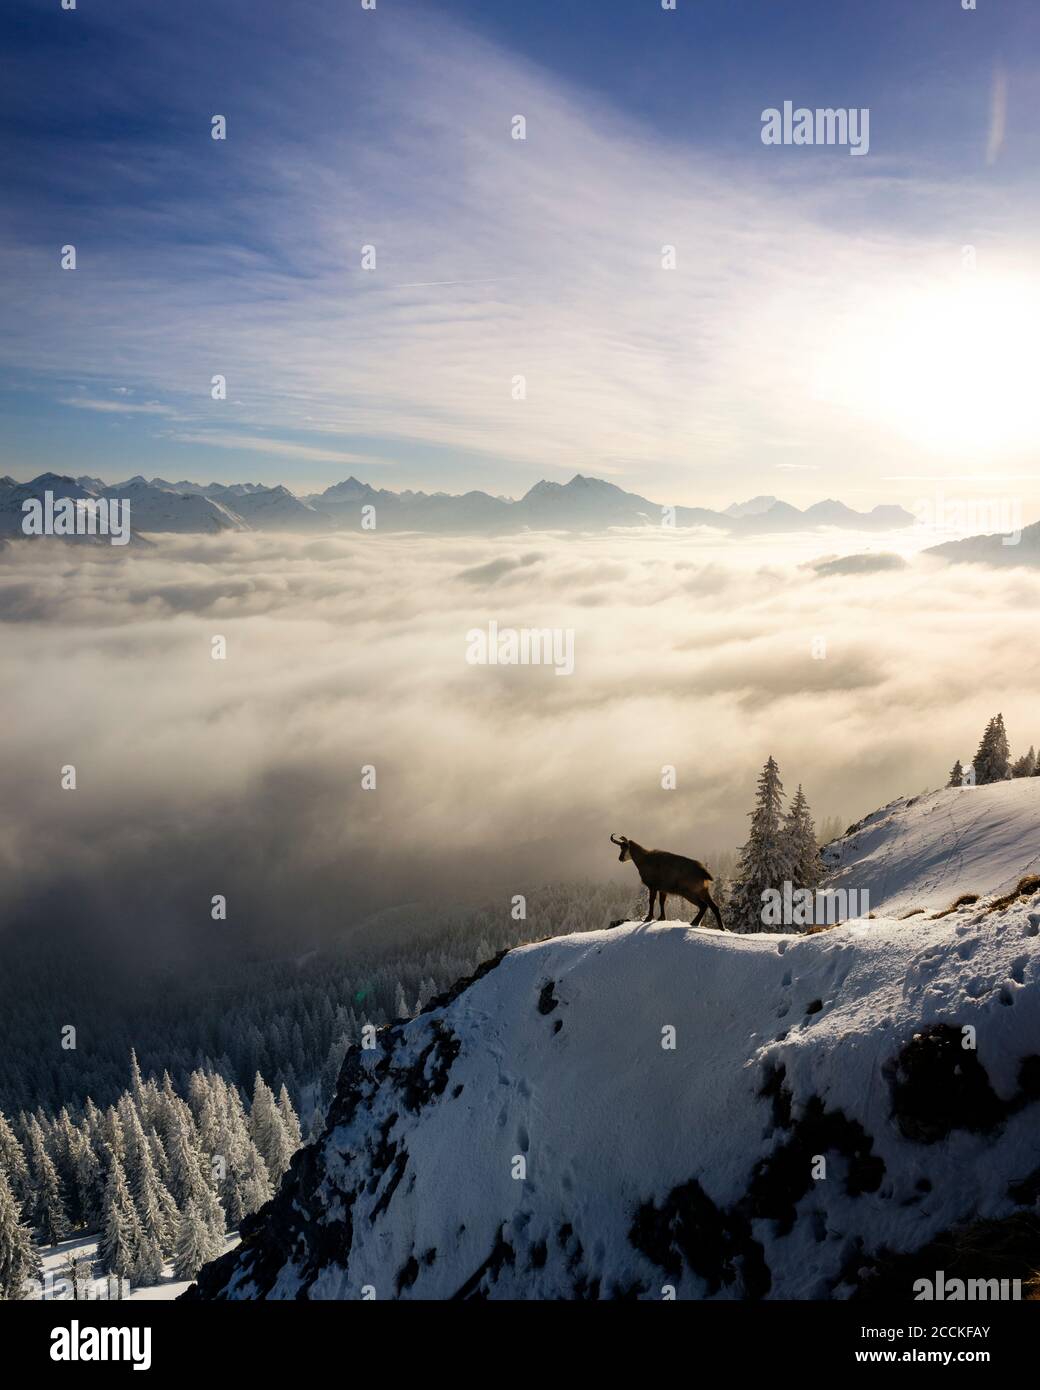 Chamois (Rupicapra rupicapra) standing at edge of snowcapped mountain peak at foggy sunrise Stock Photo